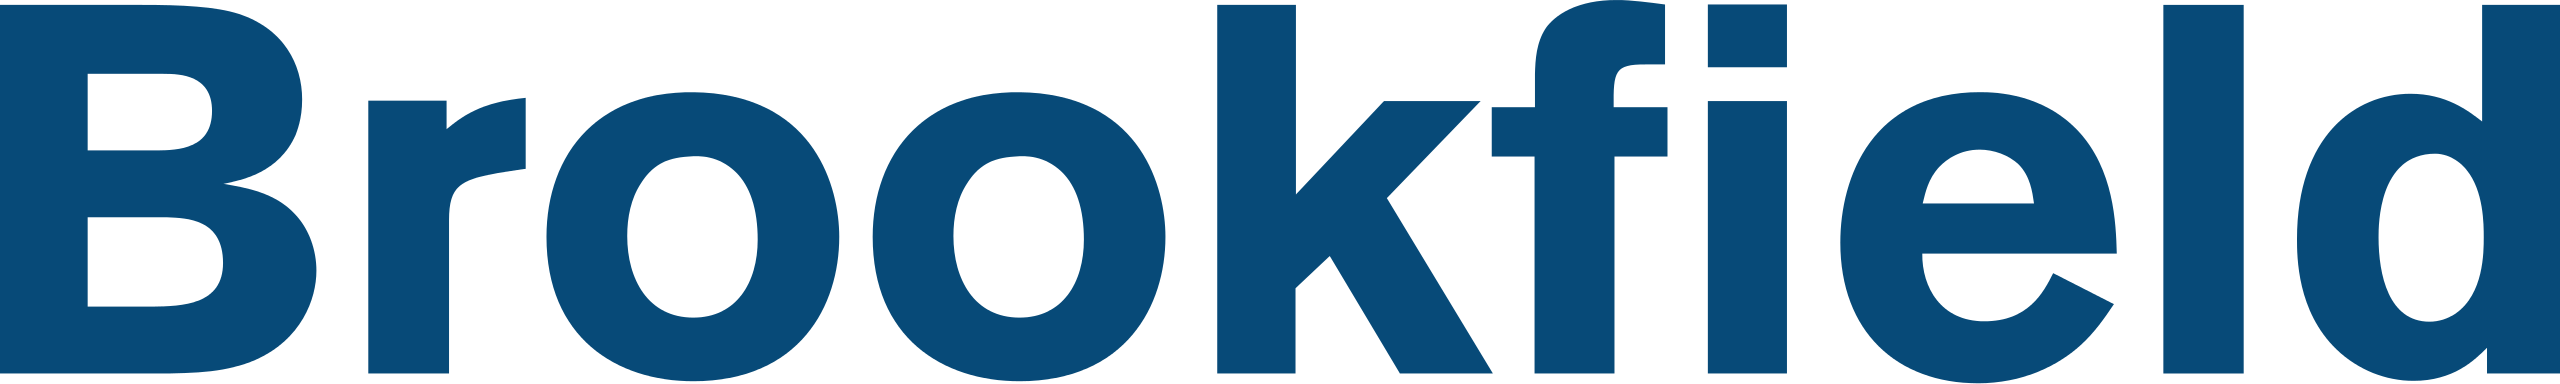 Brookfield Renewable Partners logo logo